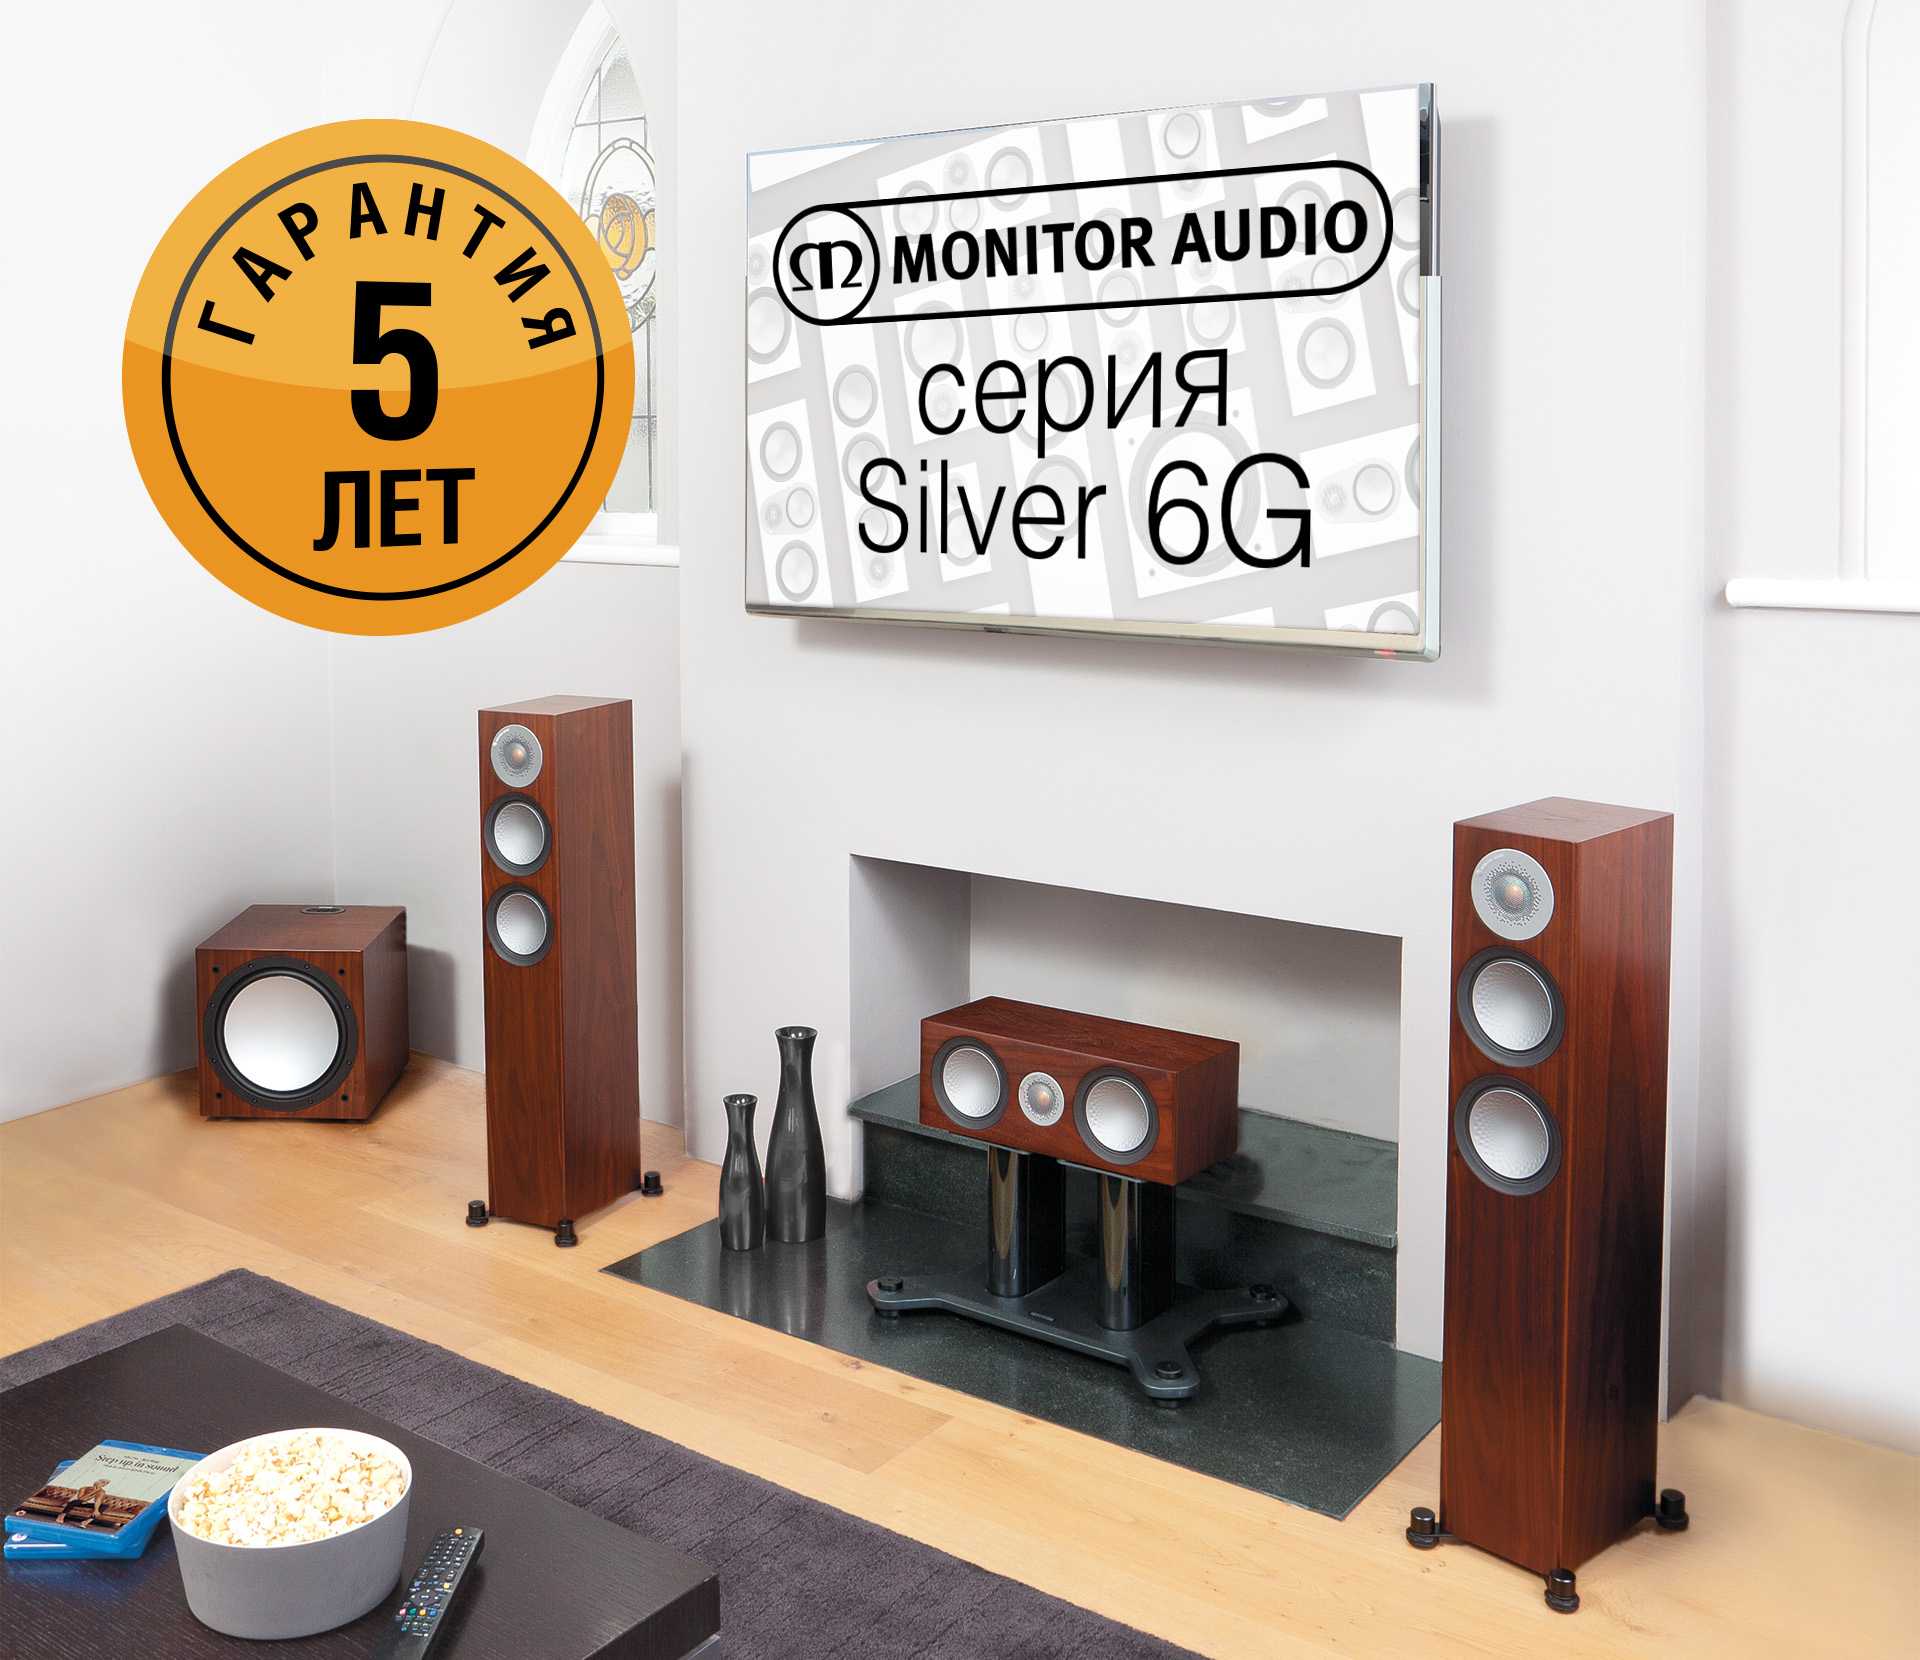 Напольная акустика monitor audio silver 8, обзор. портал "www.hifinews.ru"